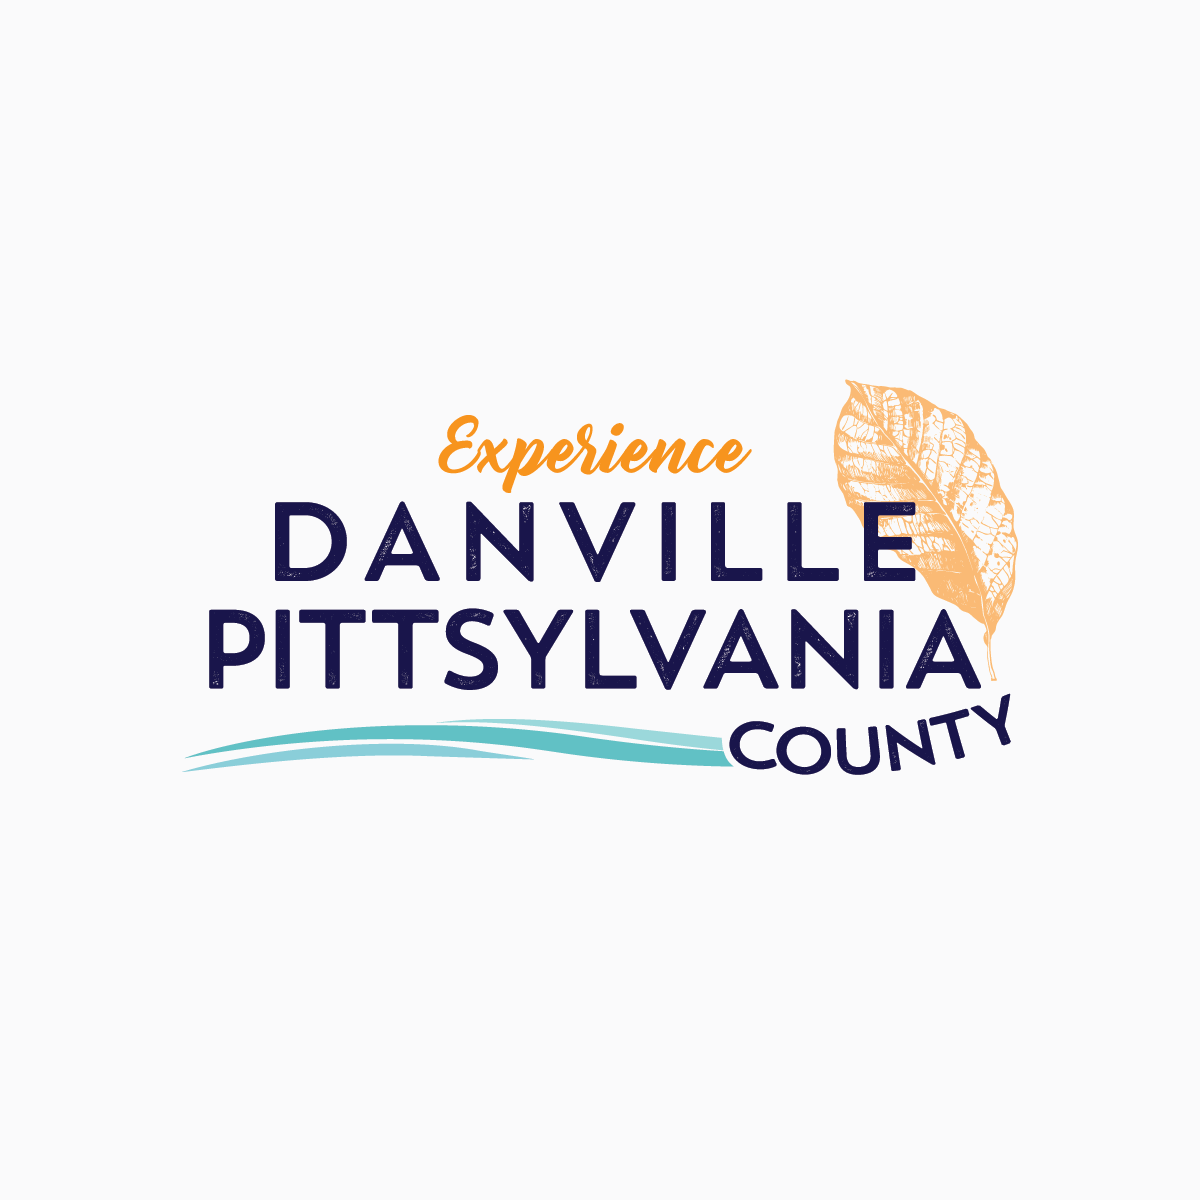 Danville Pittsylvania County.png